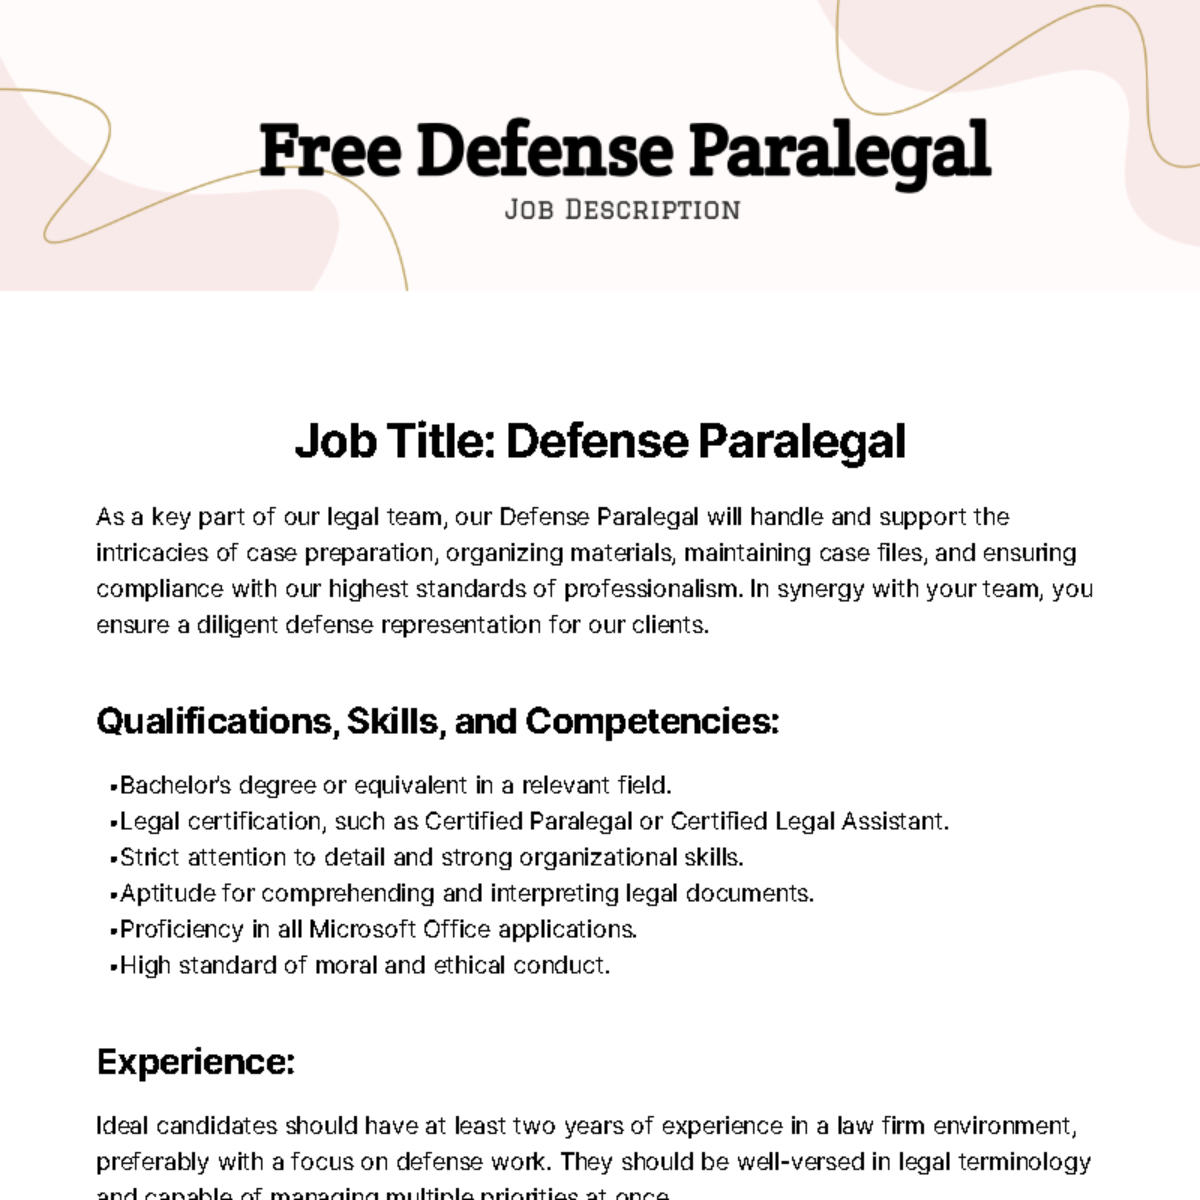 Free Defense Paralegal Job Description Template